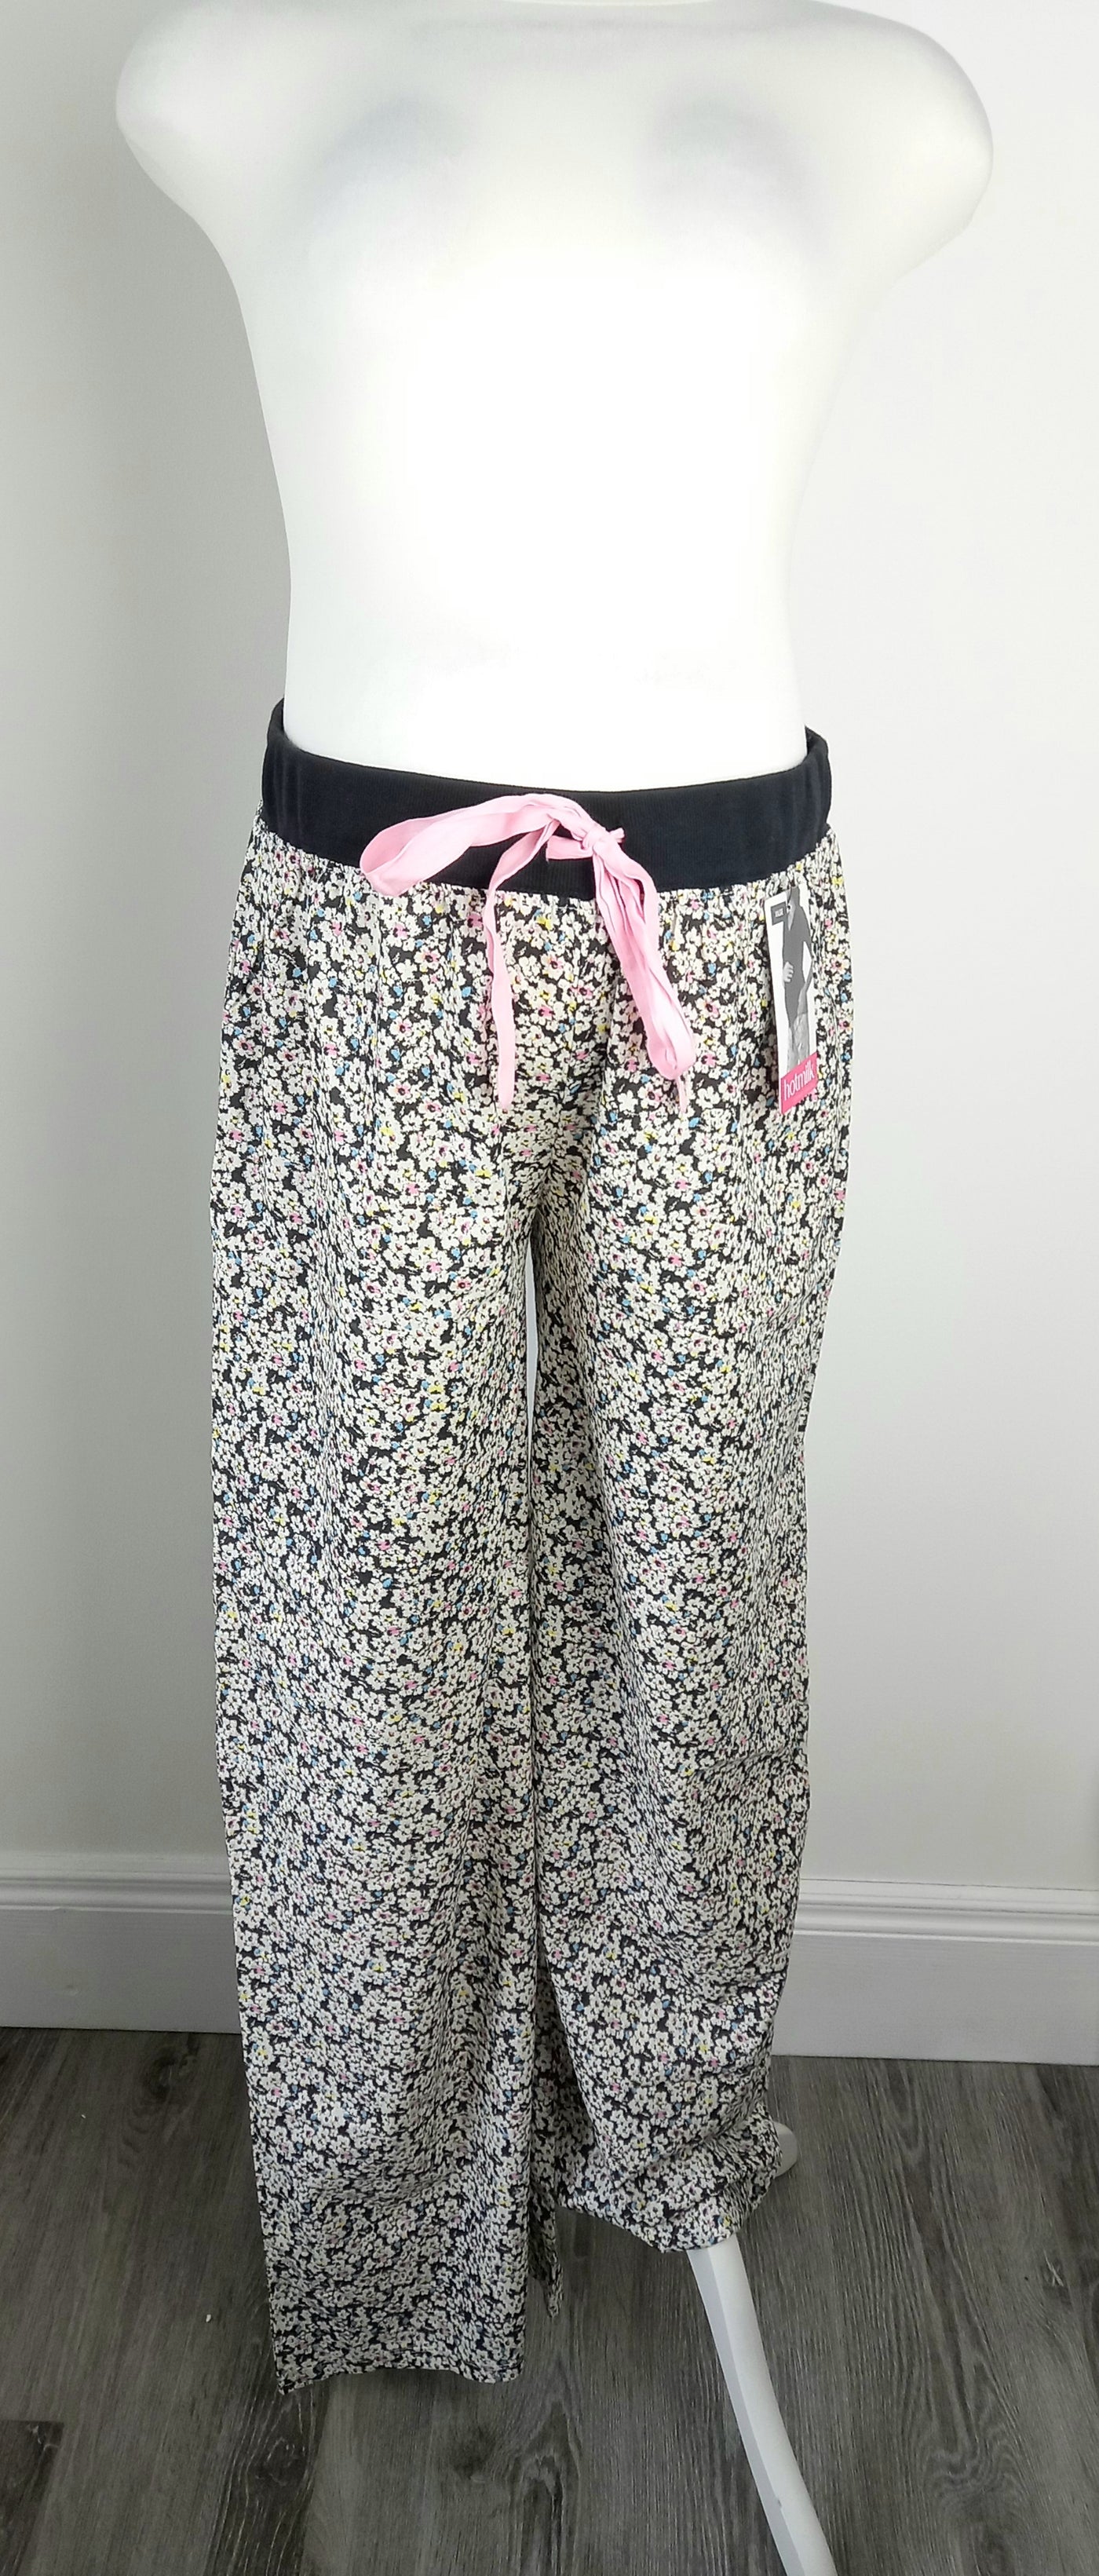 Hotmilk Maternity vintage dream floral PJ trousers (BNWT) - Size XXL (Approx UK 16/18)